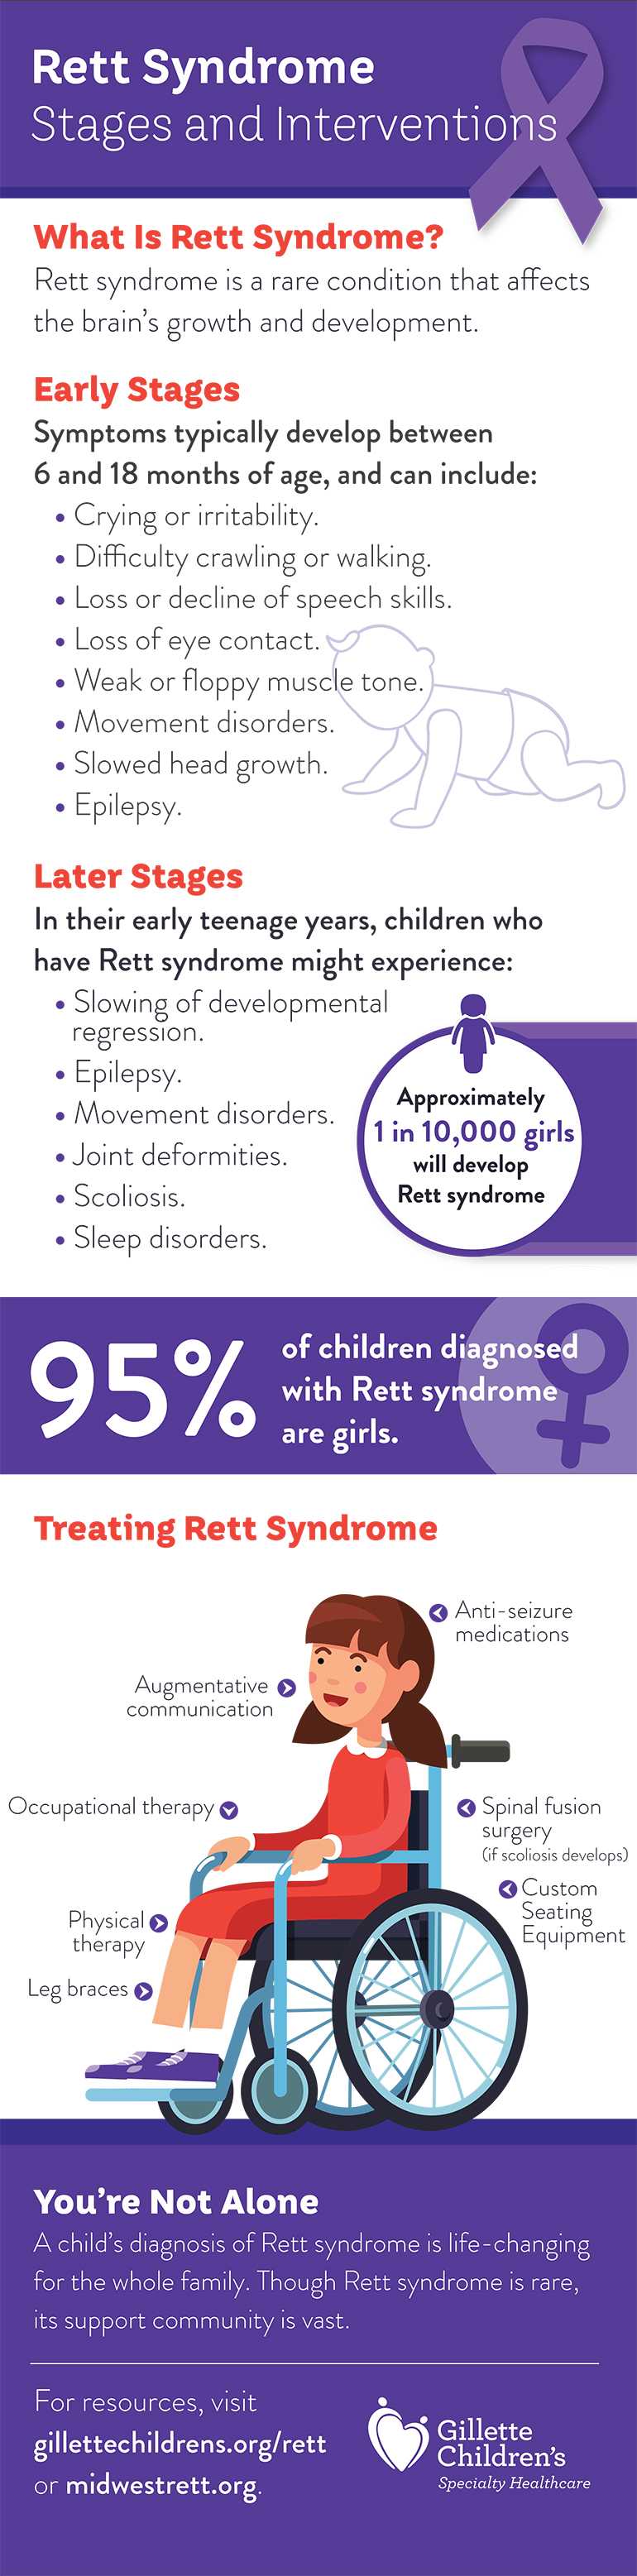 Rett Syndrome Fact Sheet